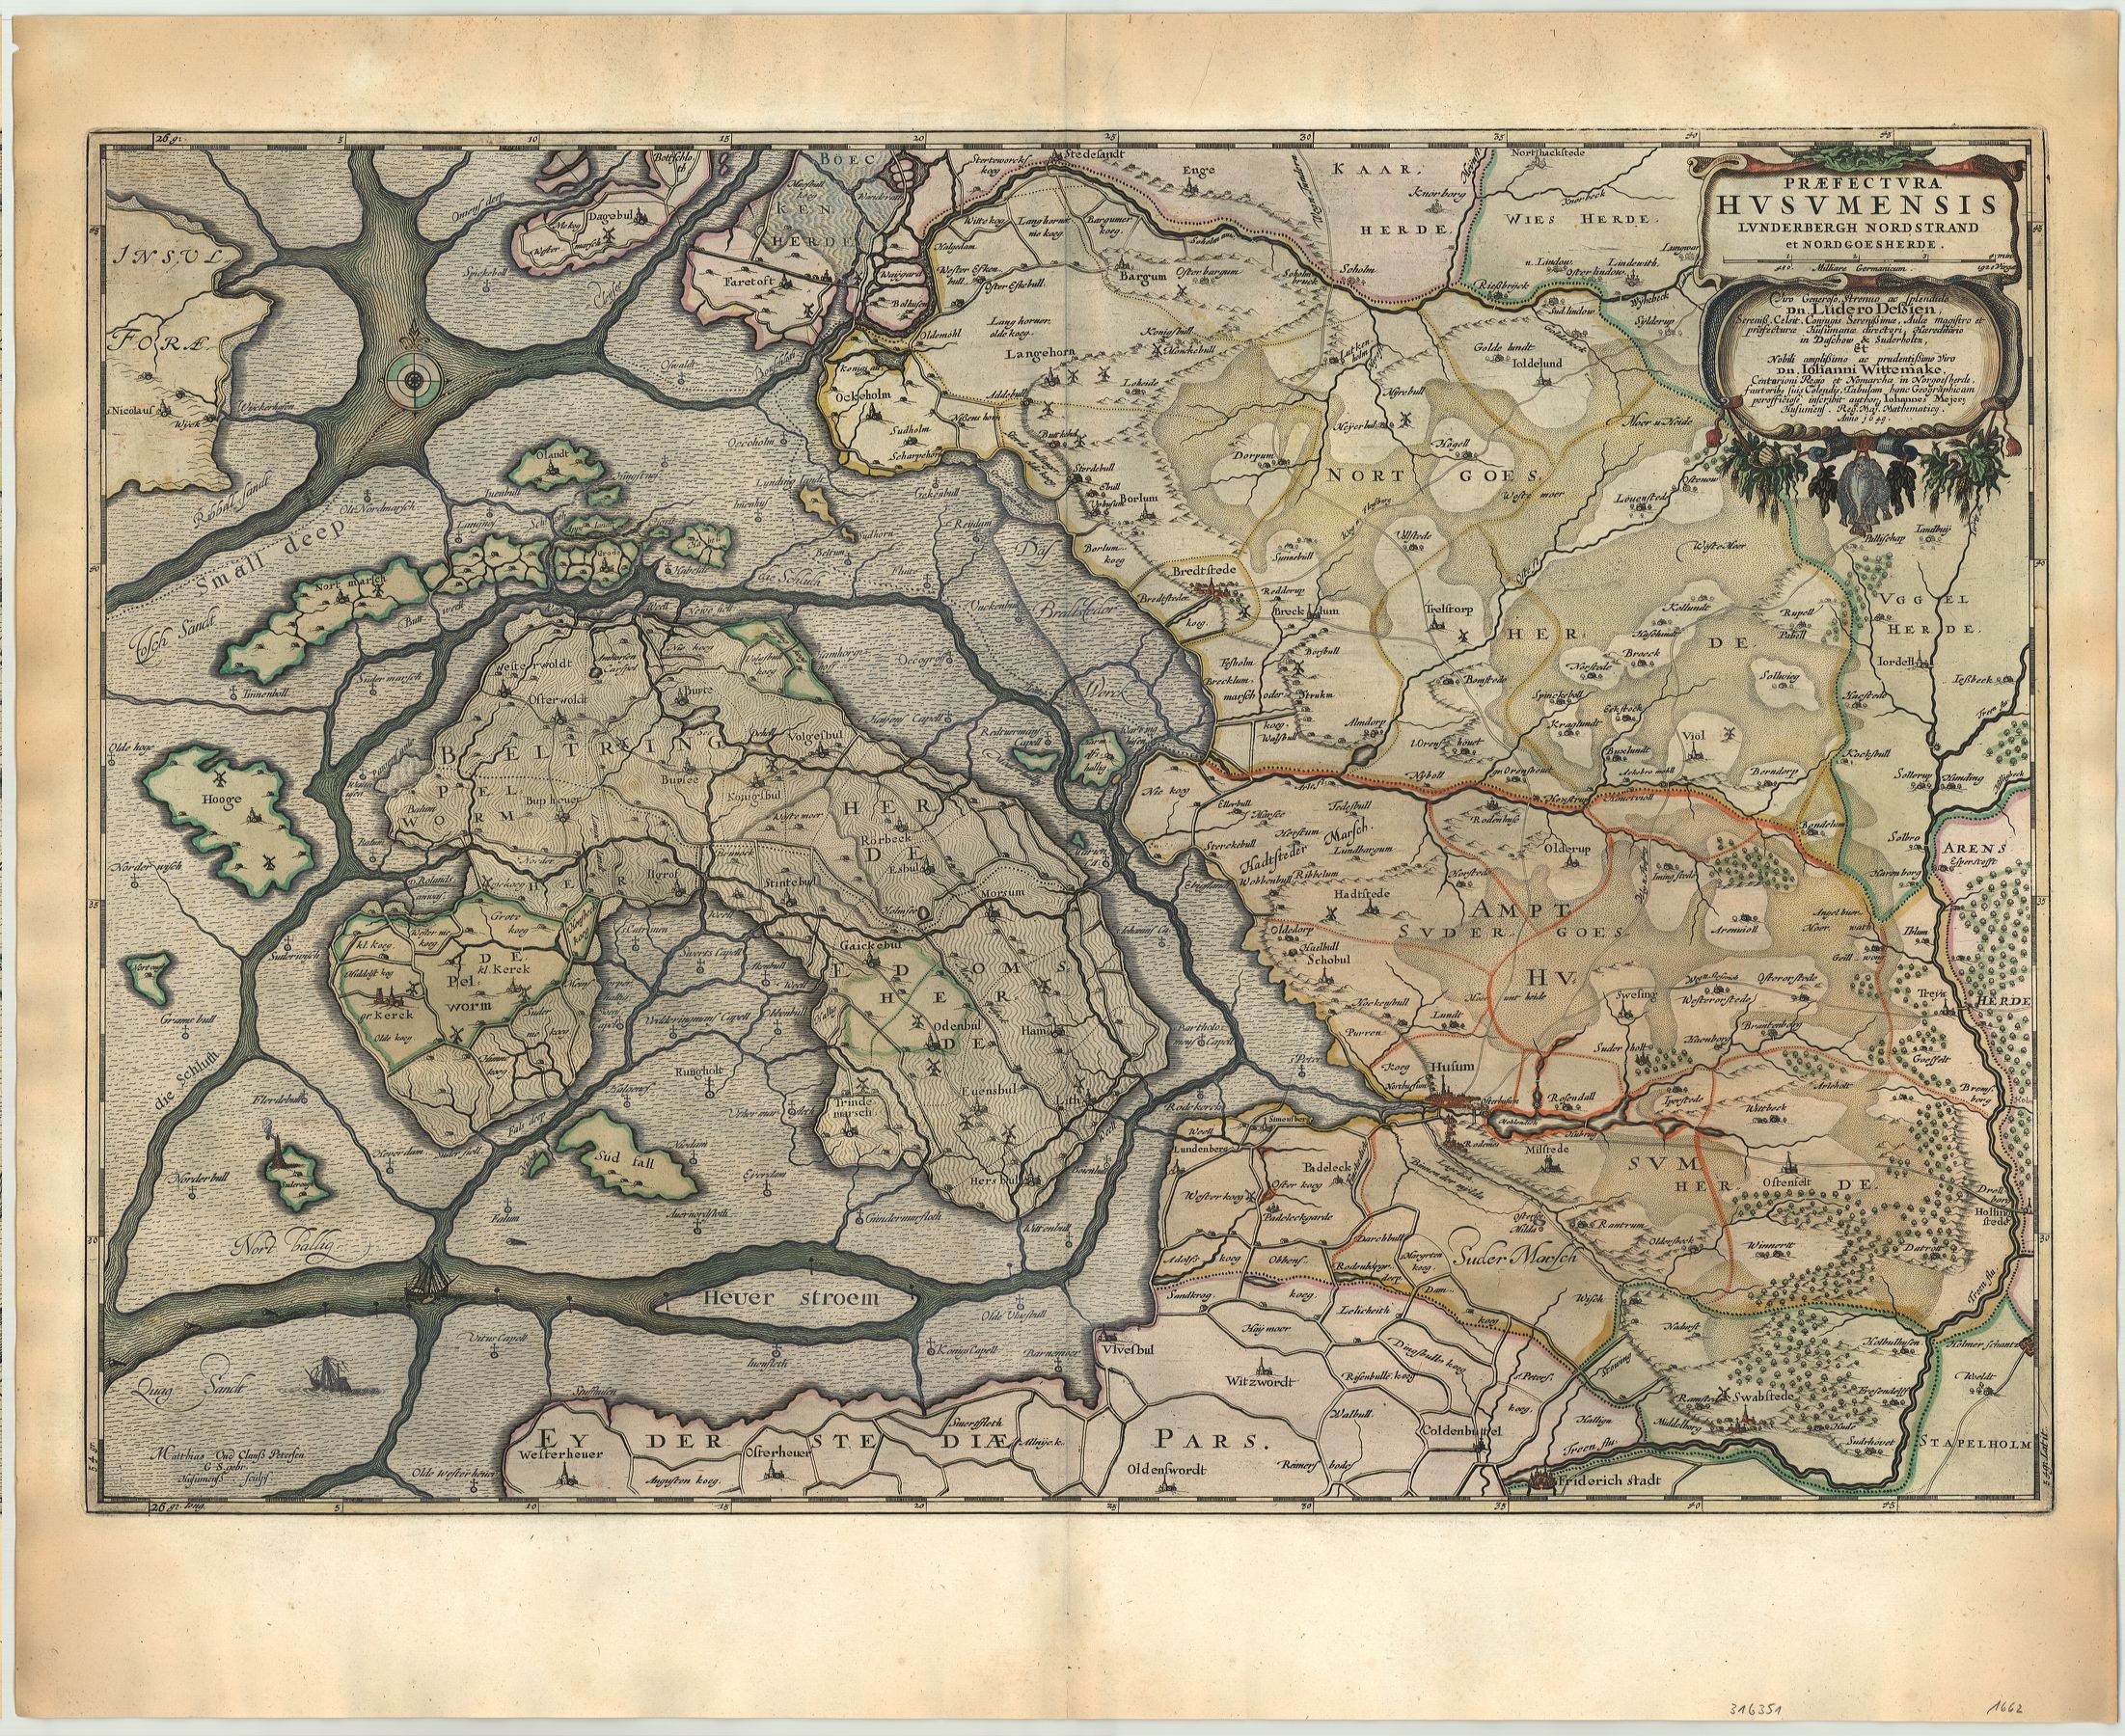 Blaeu, Joan; Mejer: Praefectura Husumensis Lunderbergh Nordstrand et Nordgoesherde 1662